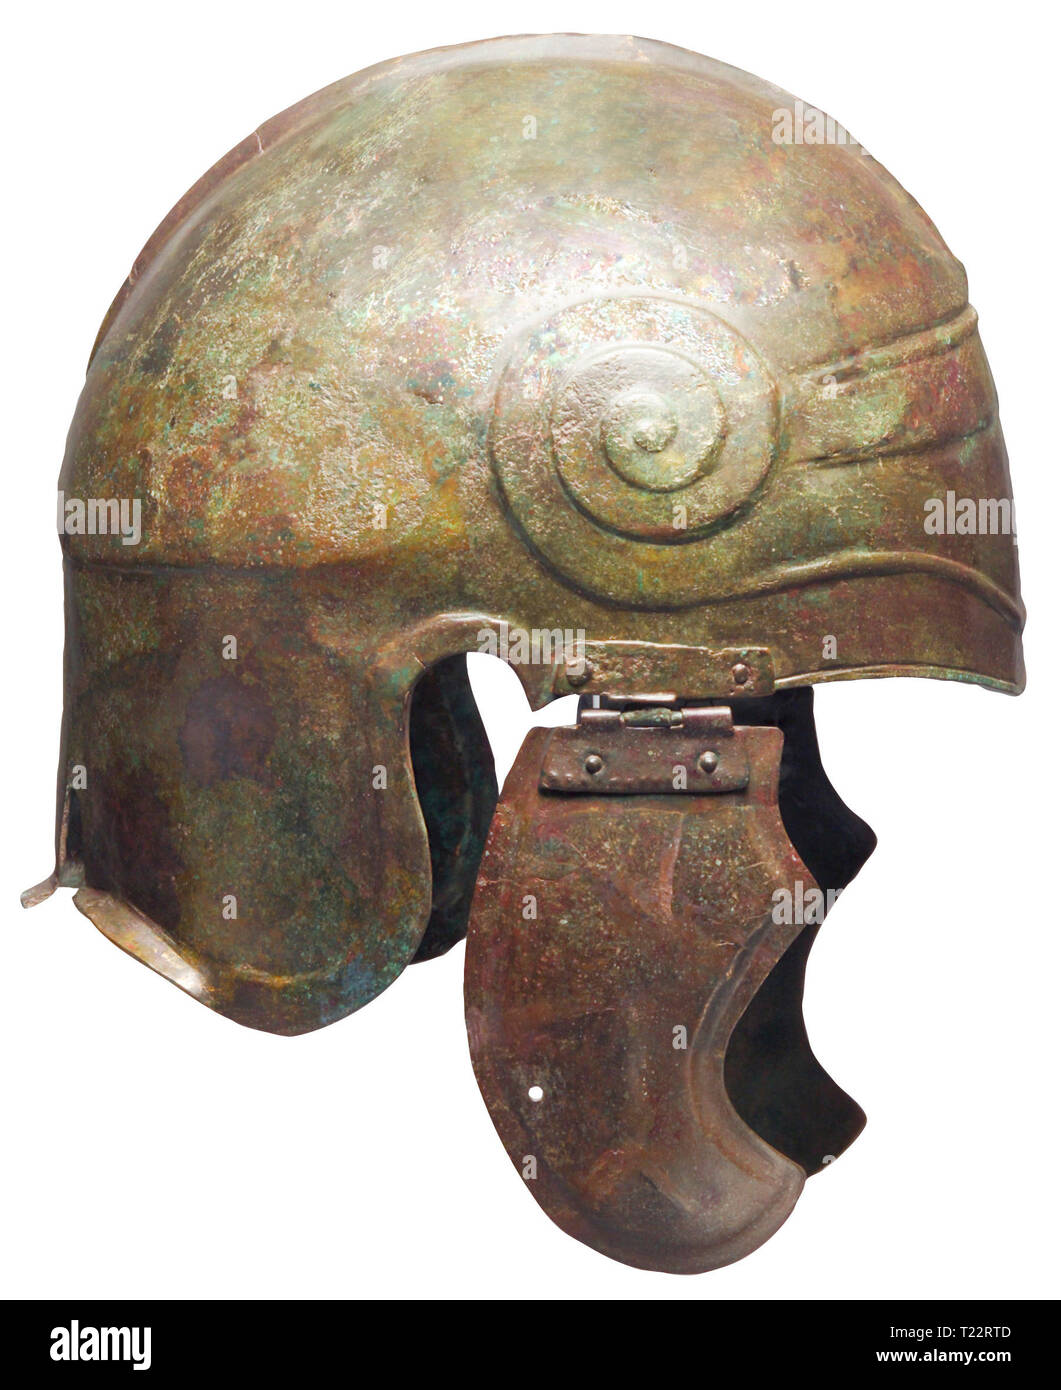 Giubbotti antiproiettile, caschi, Chalcidian casco, bronzo, greco, 5° / 4° secolo a.c. Additional-Rights-Clearance-Info-Not-Available Foto Stock